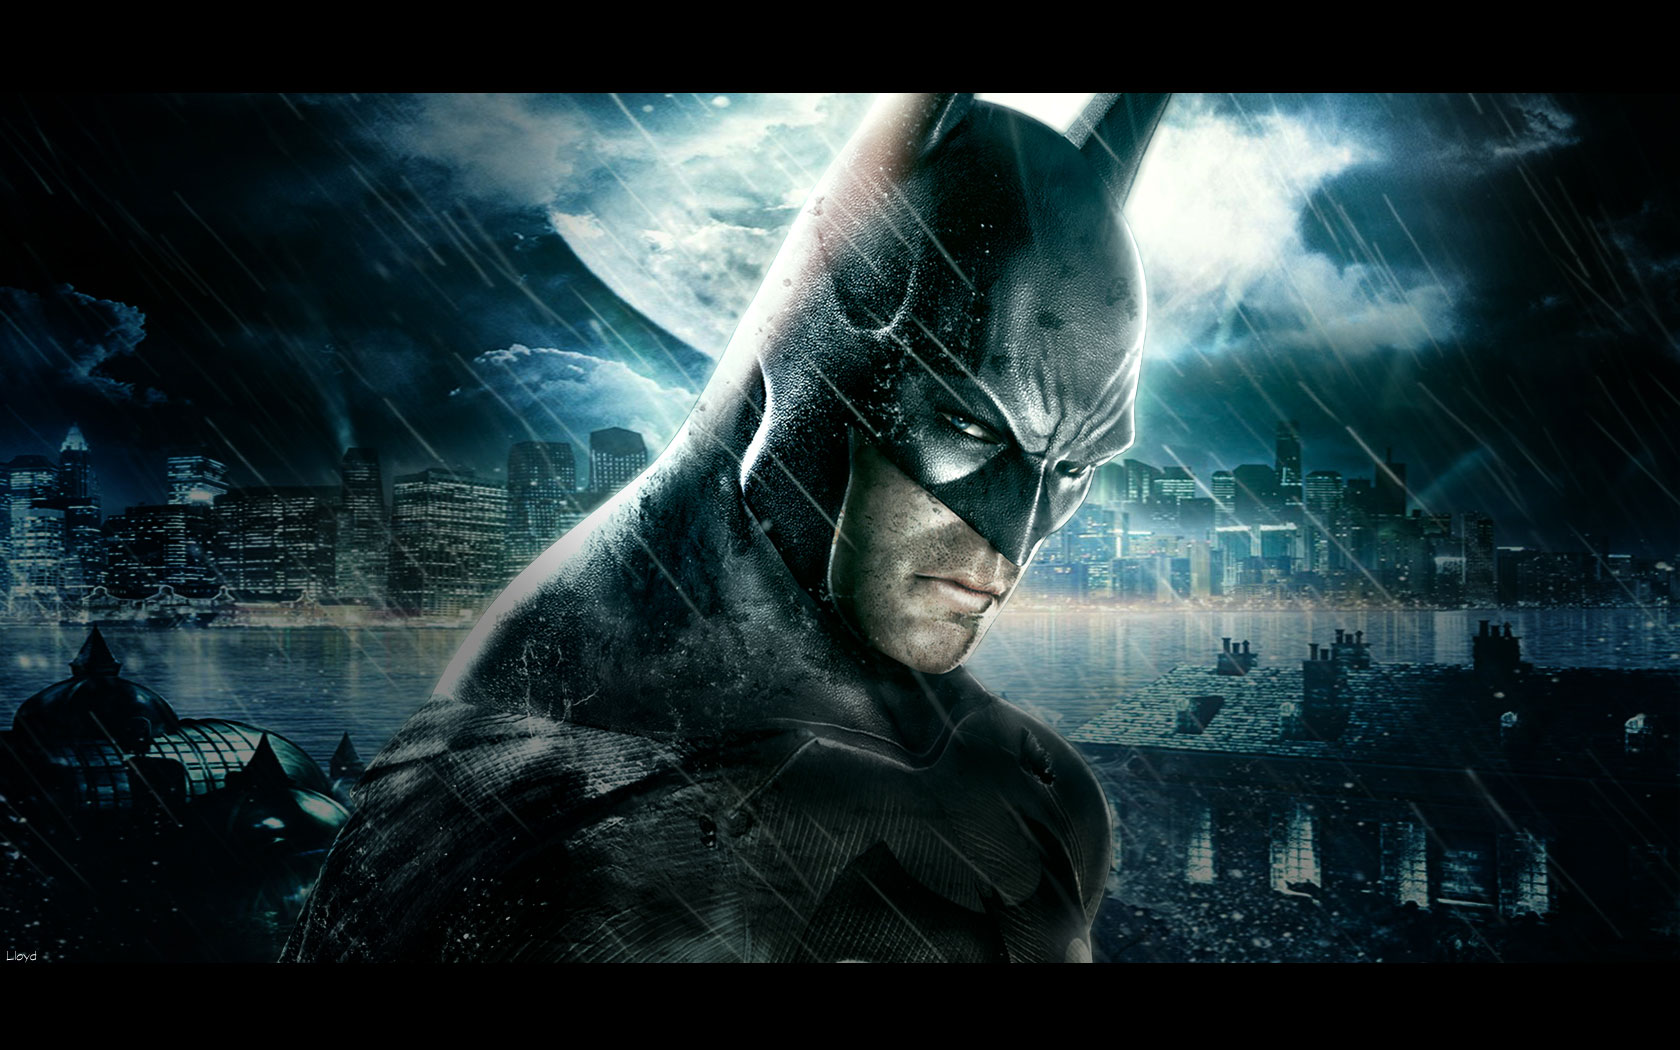 335543 descargar imagen videojuego, batman: arkham asylum, hombre murciélago: fondos de pantalla y protectores de pantalla gratis